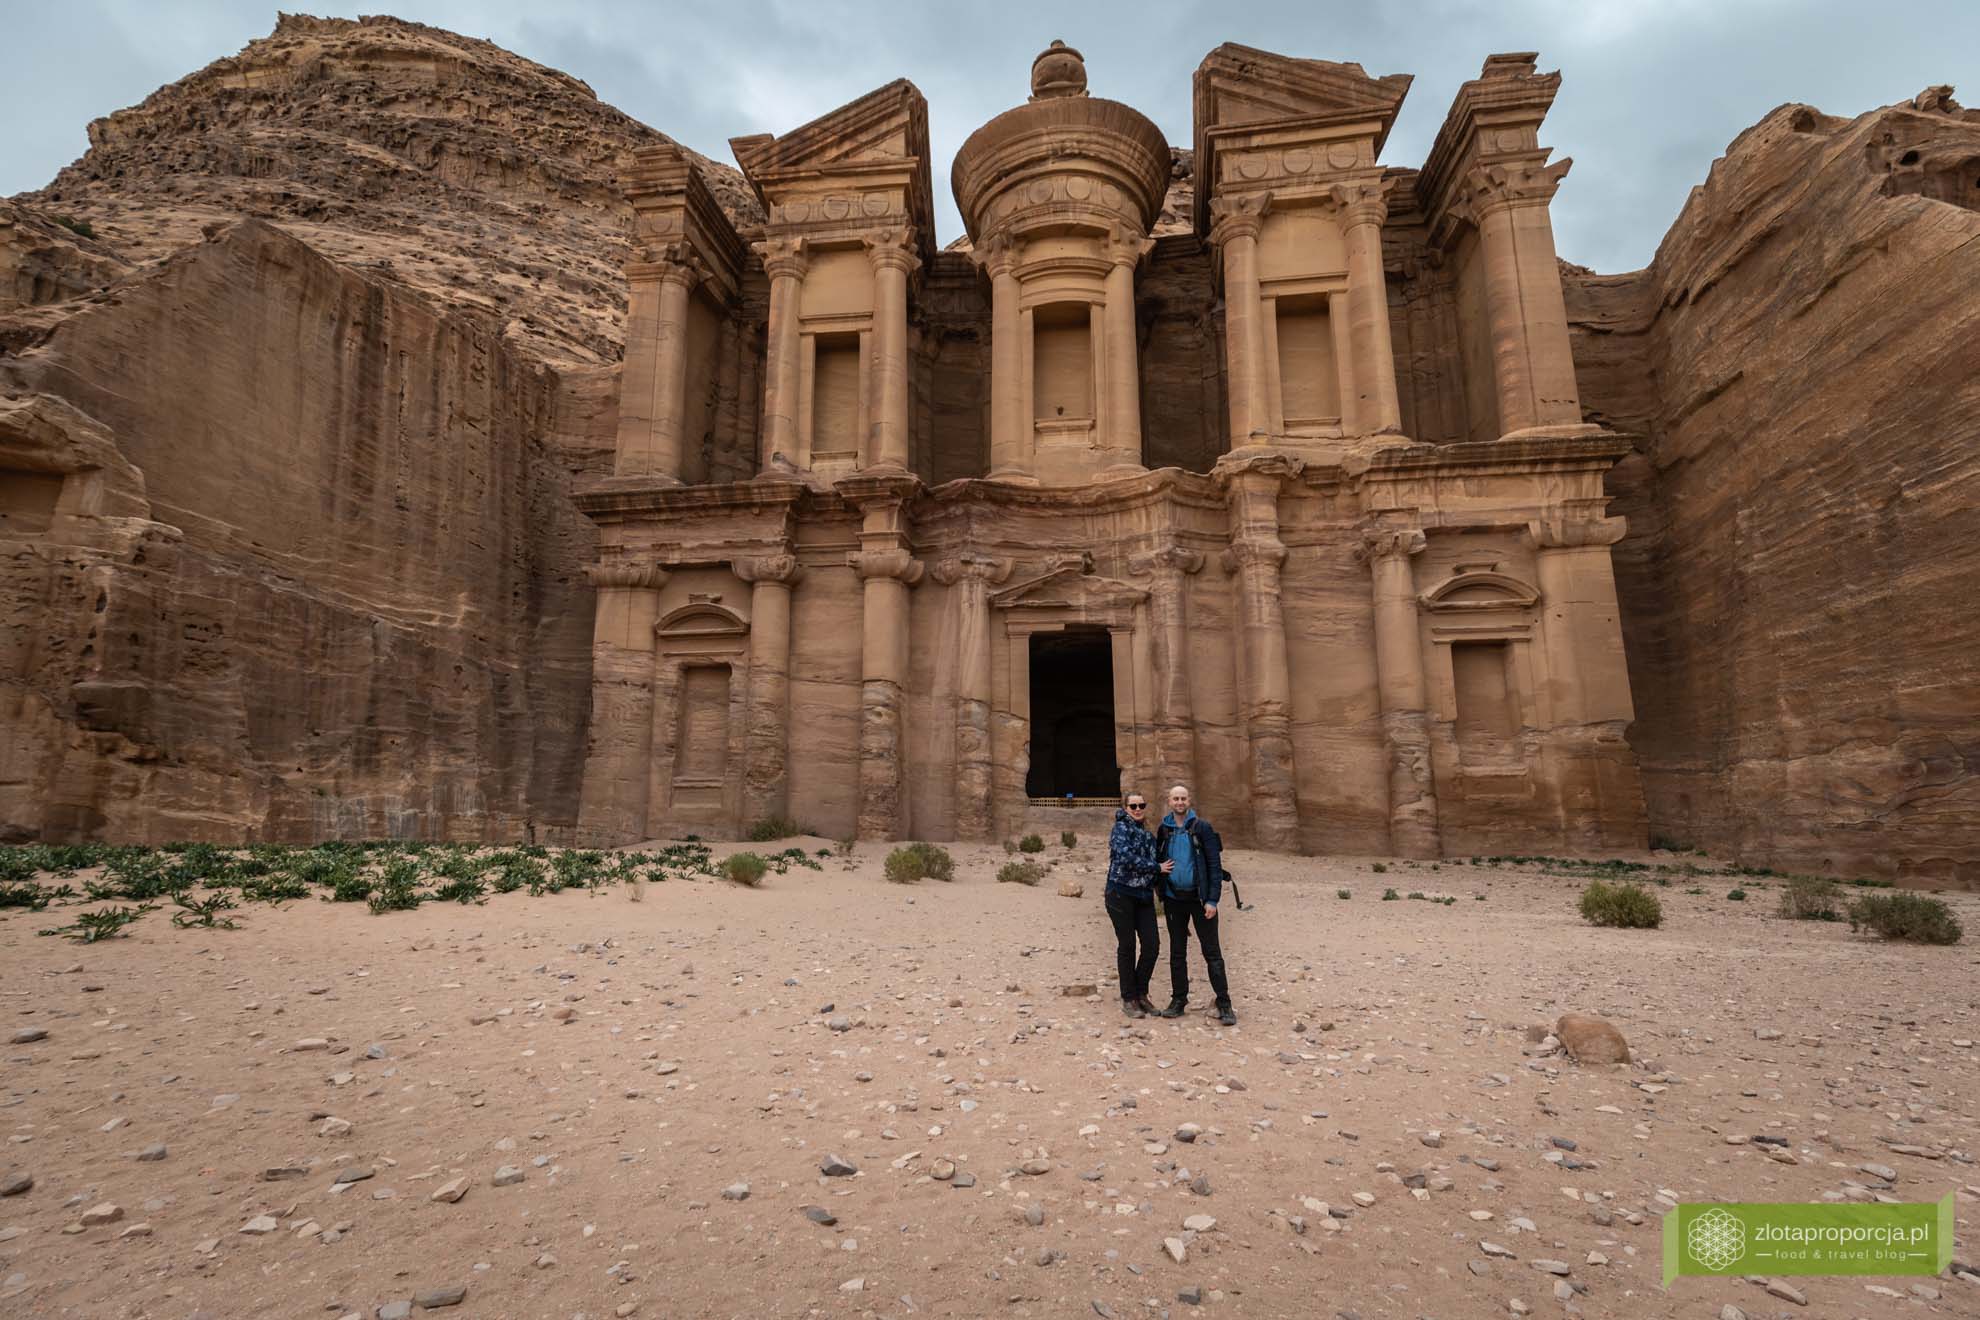 Petra; Jordania; atrakcje Petry; miasto wykute w skale; Petra Jordania; Petra cud świata; miasto Nabatejczyków; Klasztor Petra; Ad Dajr;